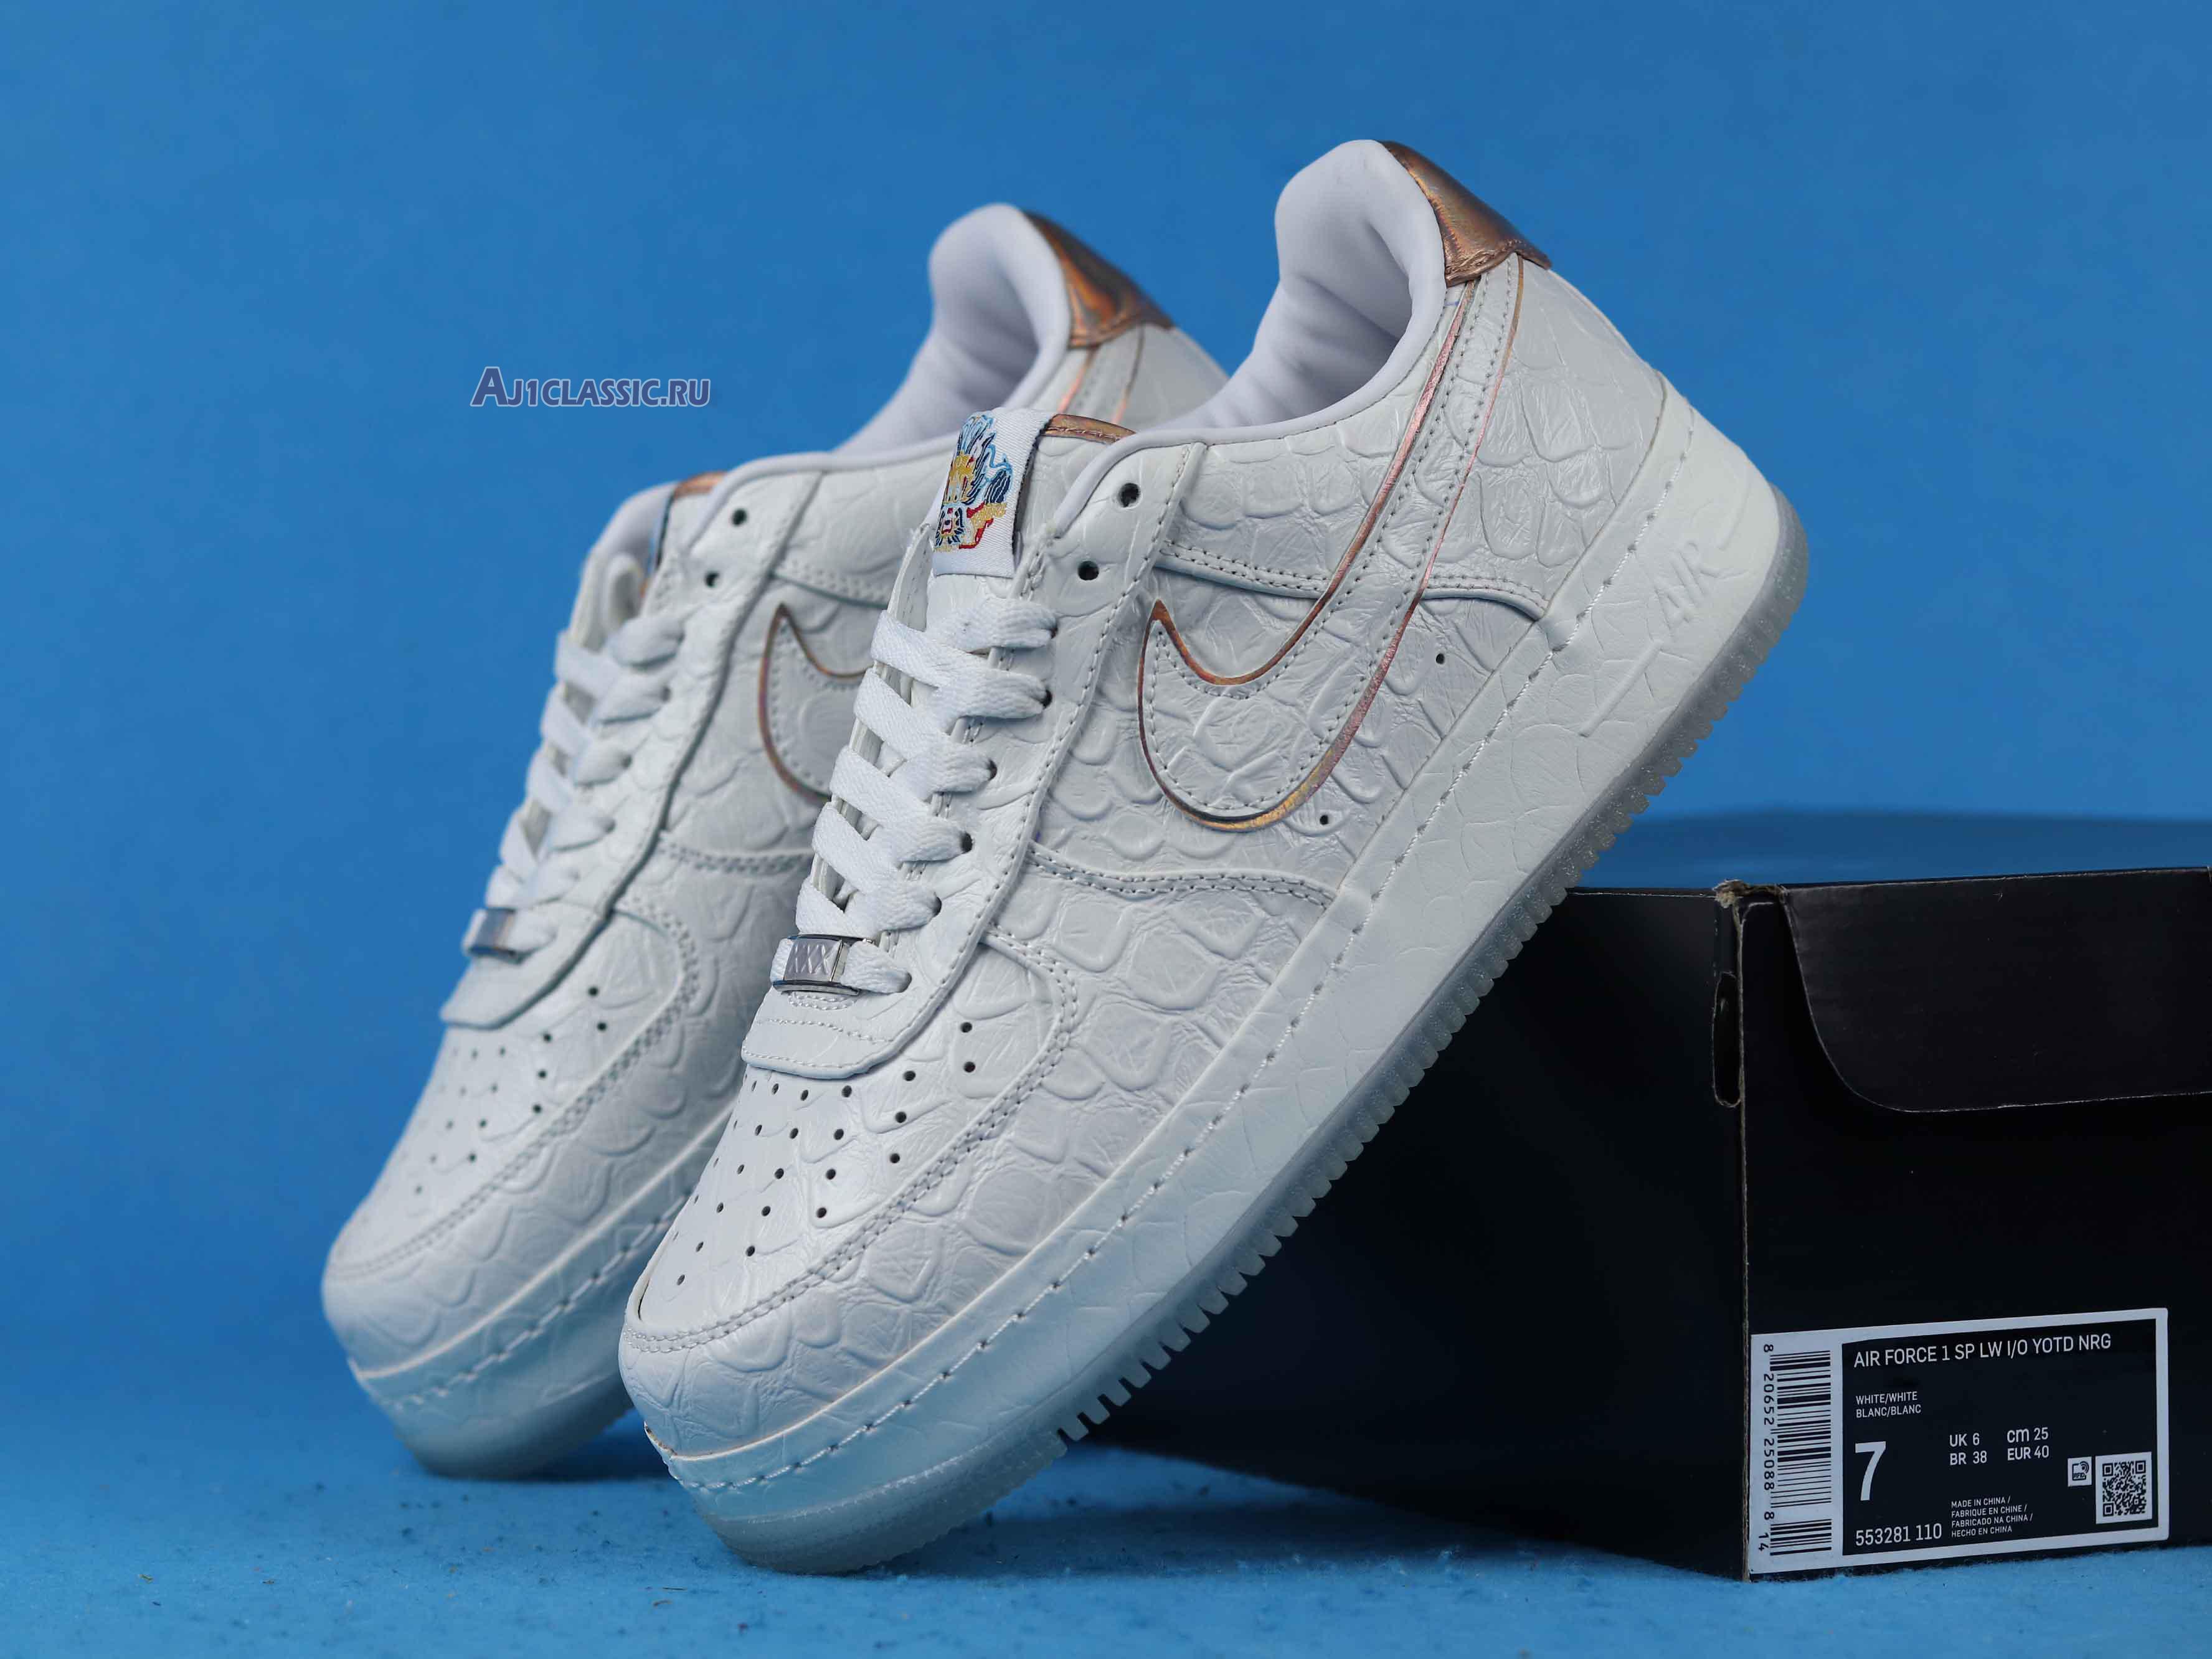 Nike Air Force 1 Sp Low I/O Nrg White Dragon 553281-110 White/White/Gold Sneakers